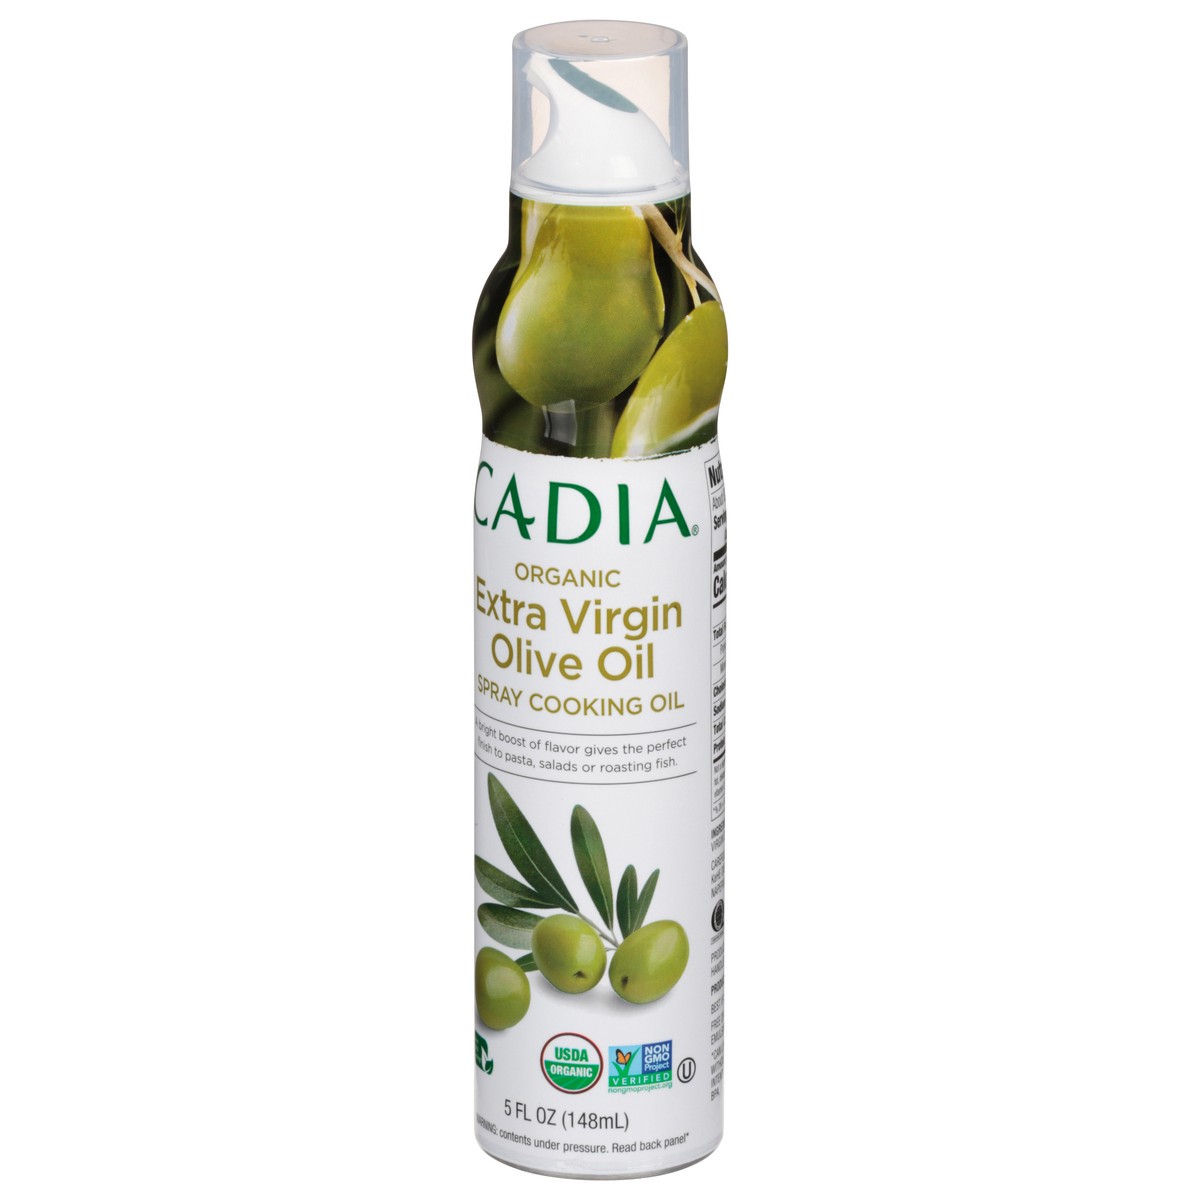 slide 9 of 13, Cadia Extra Virgin Olive Oil Organic Spray Cooking Oil 5 fl oz, 5 fl oz